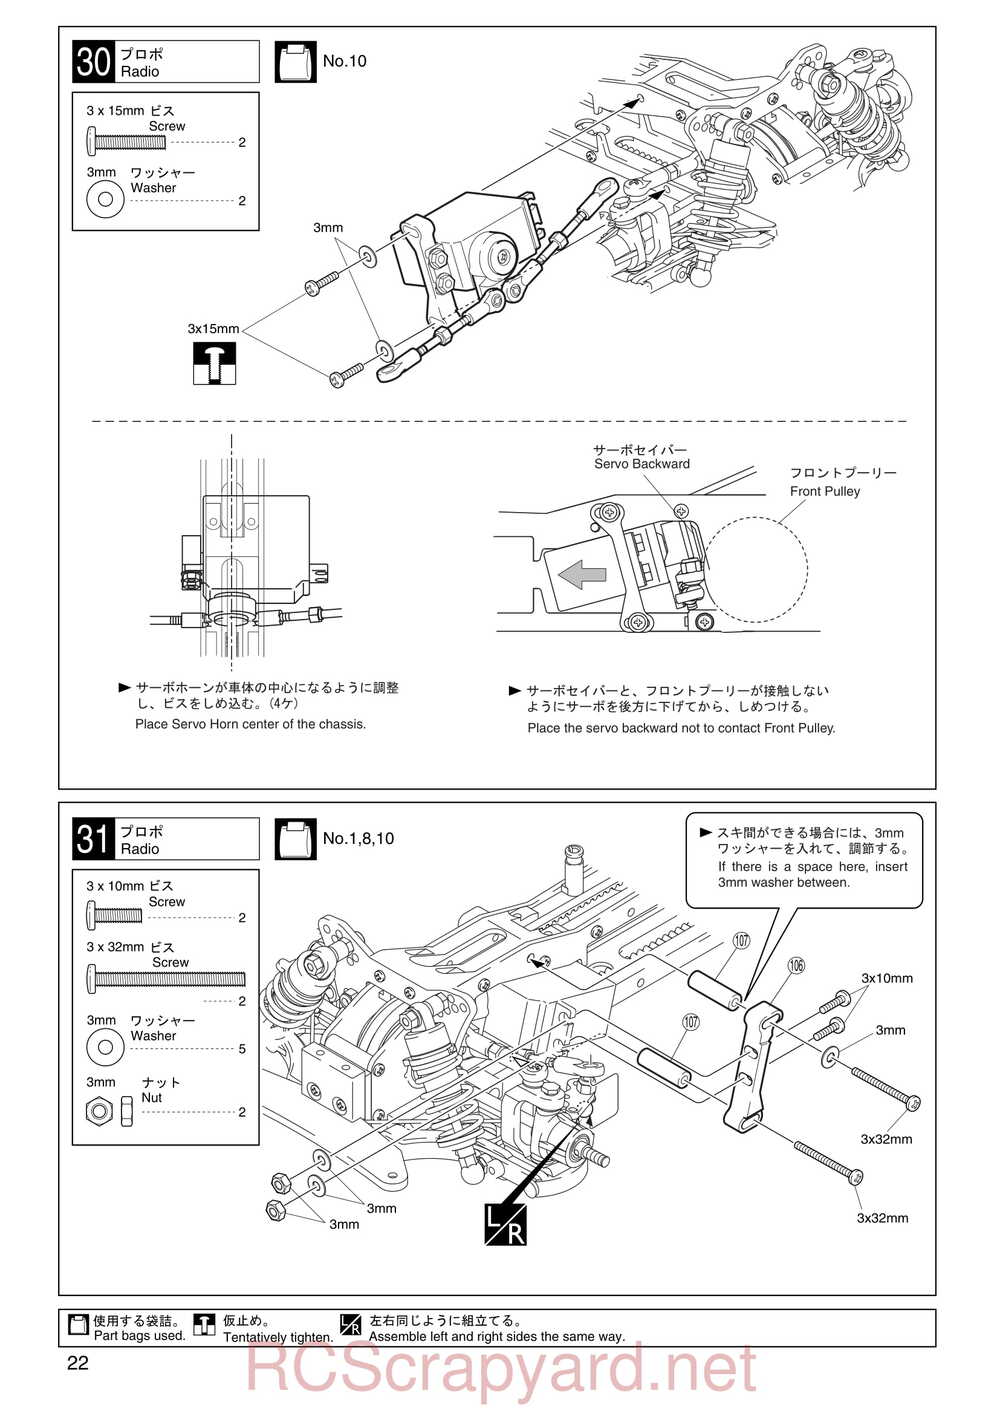 Kyosho - 30101 - KX-One - Manual - Page 22